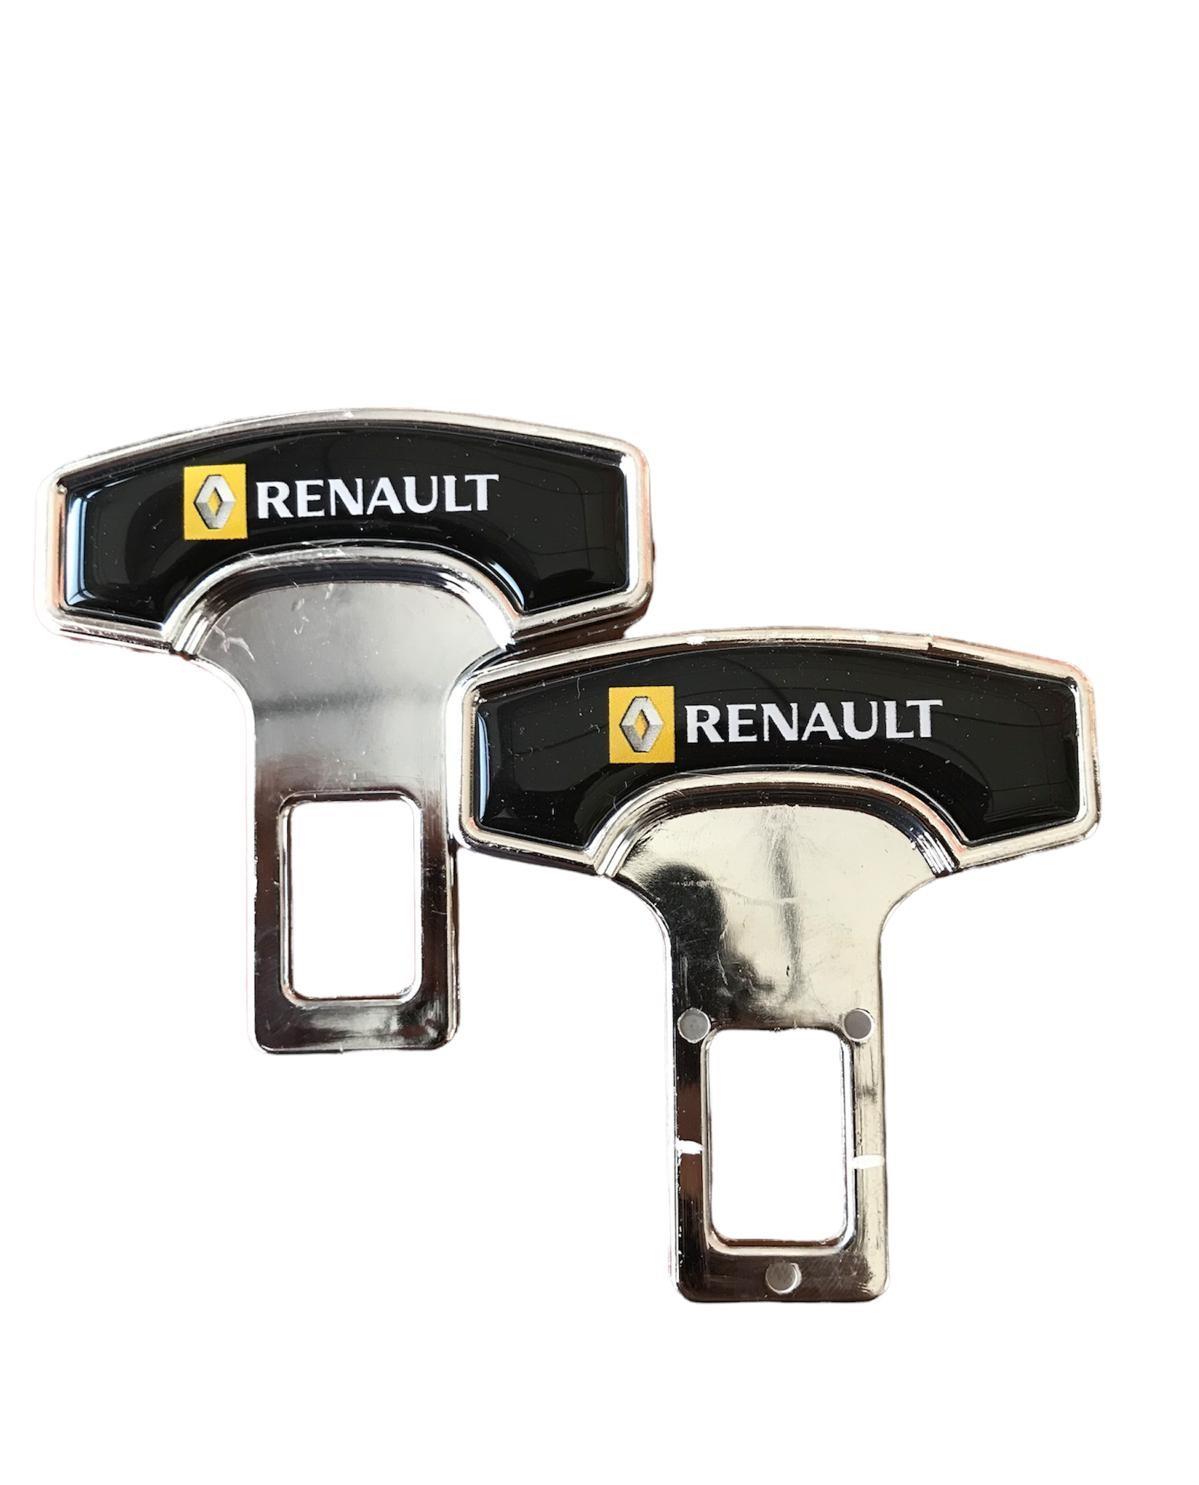 Oto Kemer Tokası Renault Logolu 2 Adet